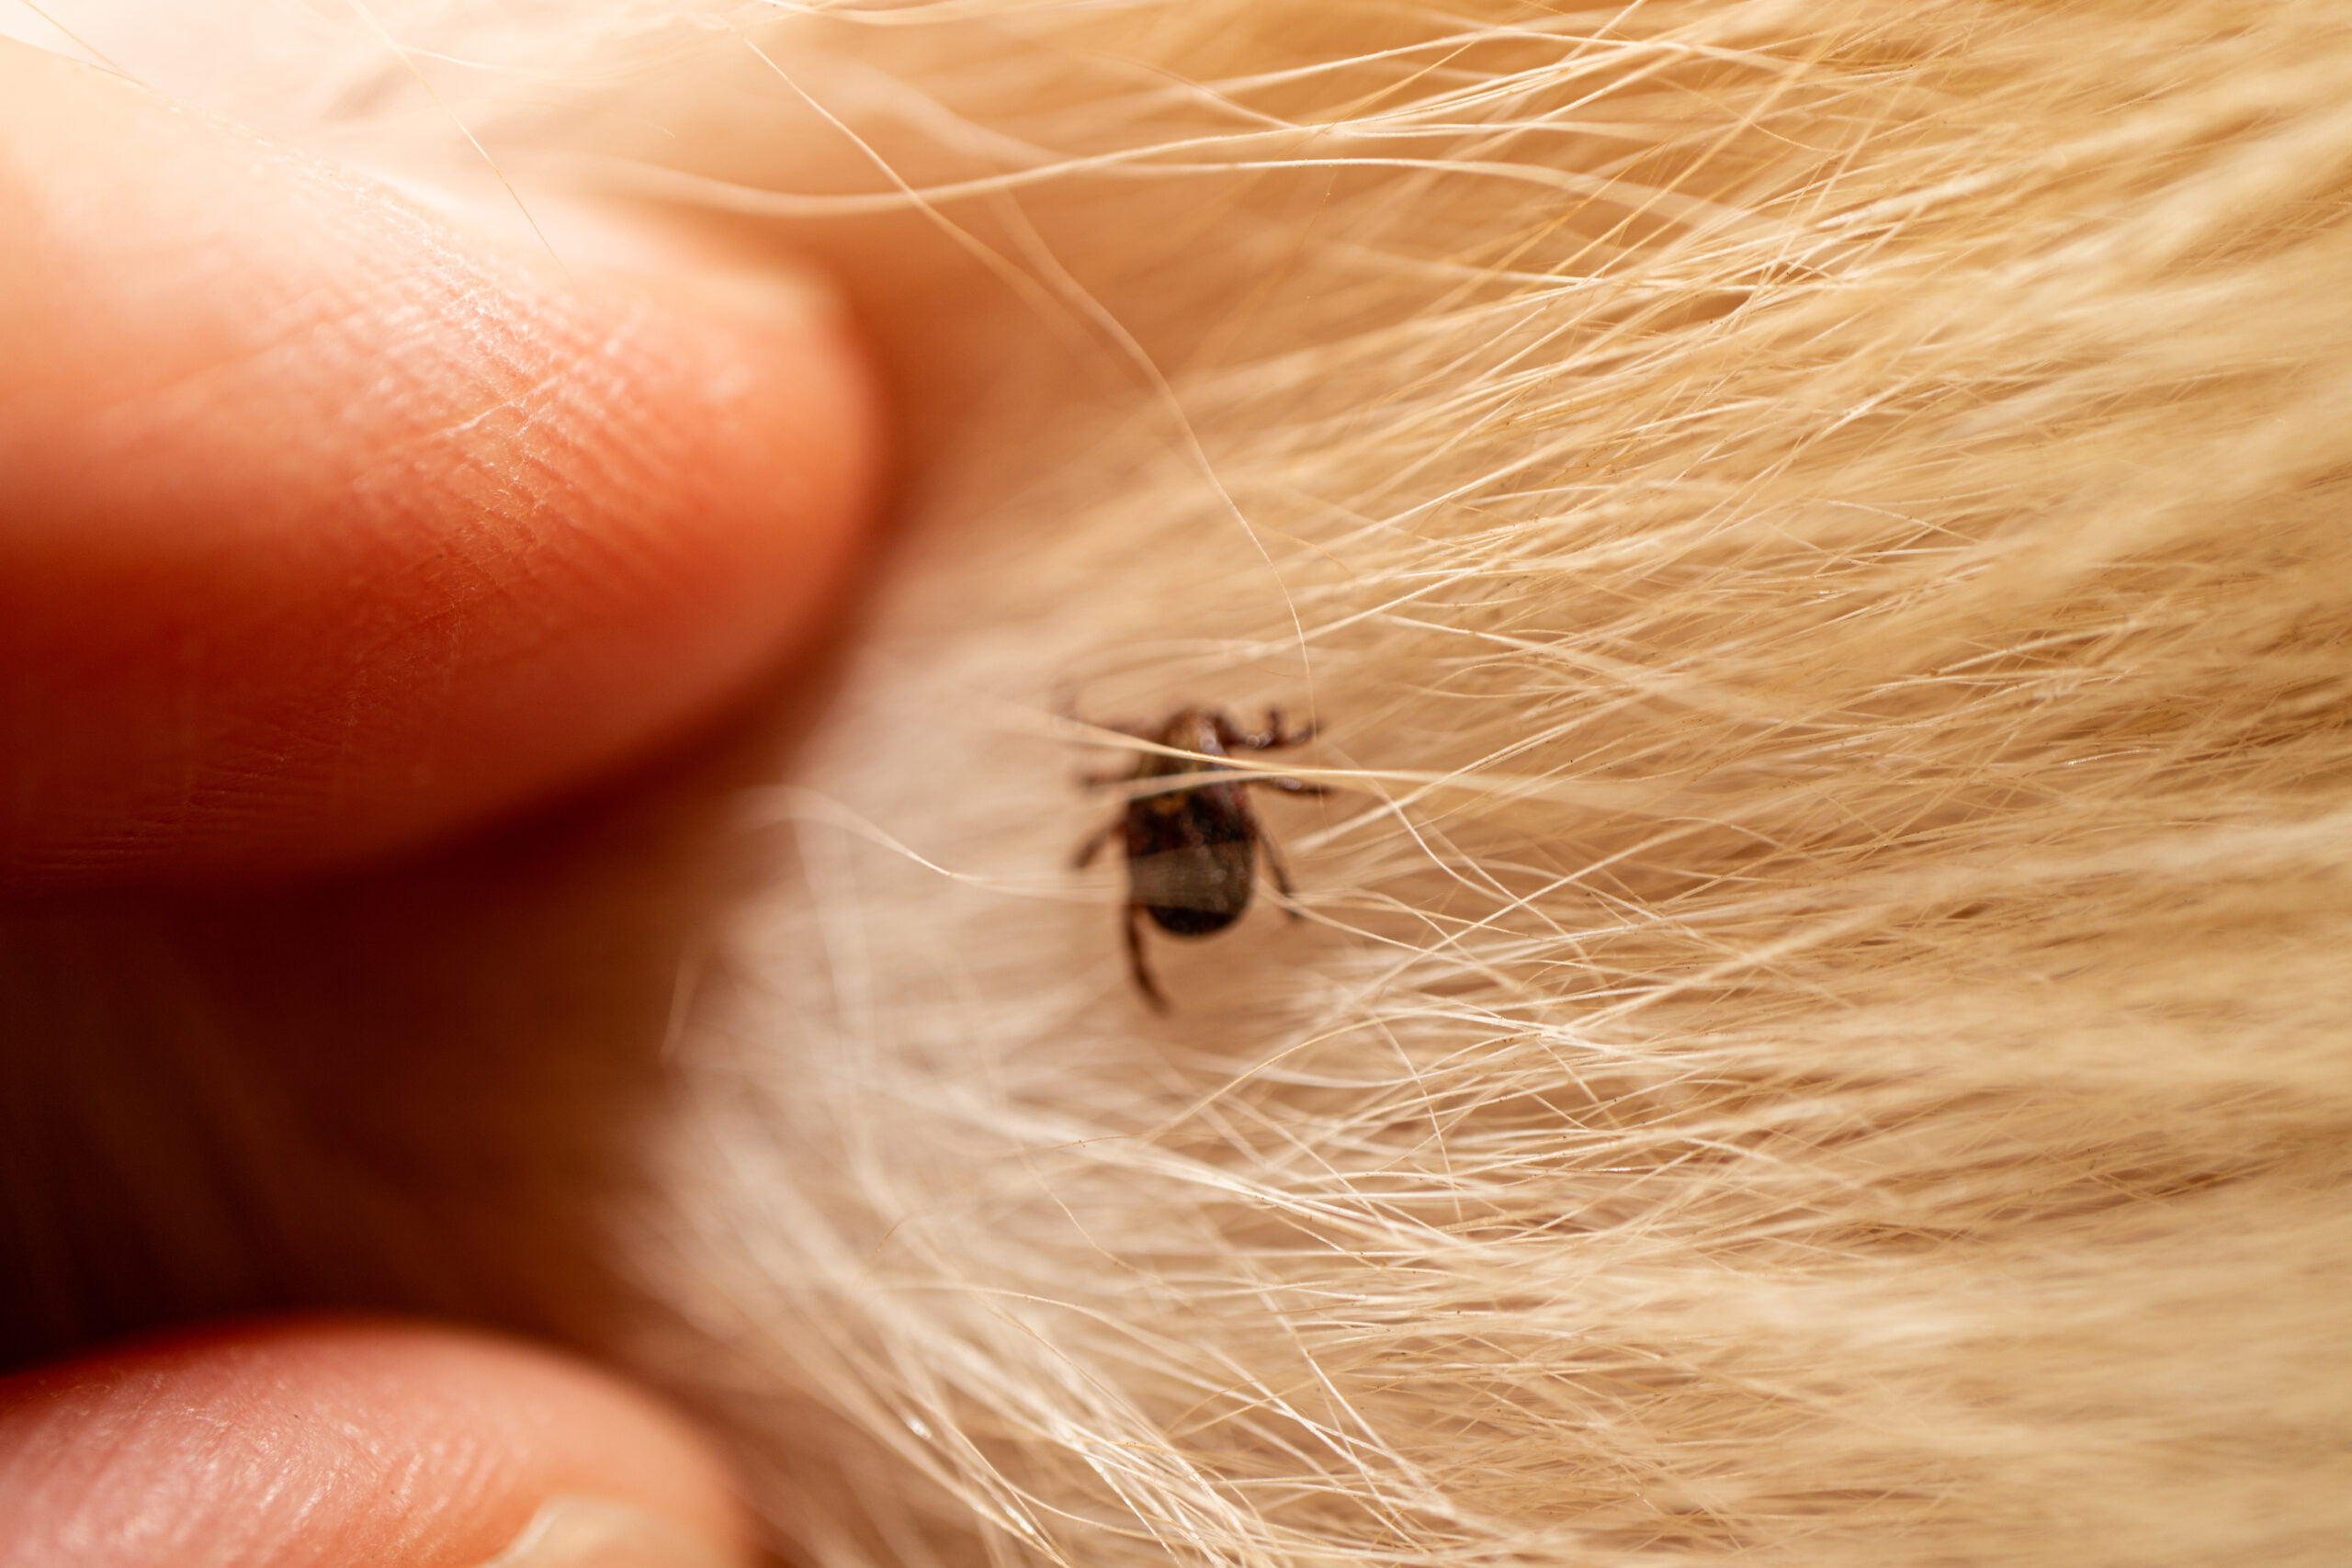 Ticks on dog hair. Ticks sucking dog blood. Dangerous insect mit